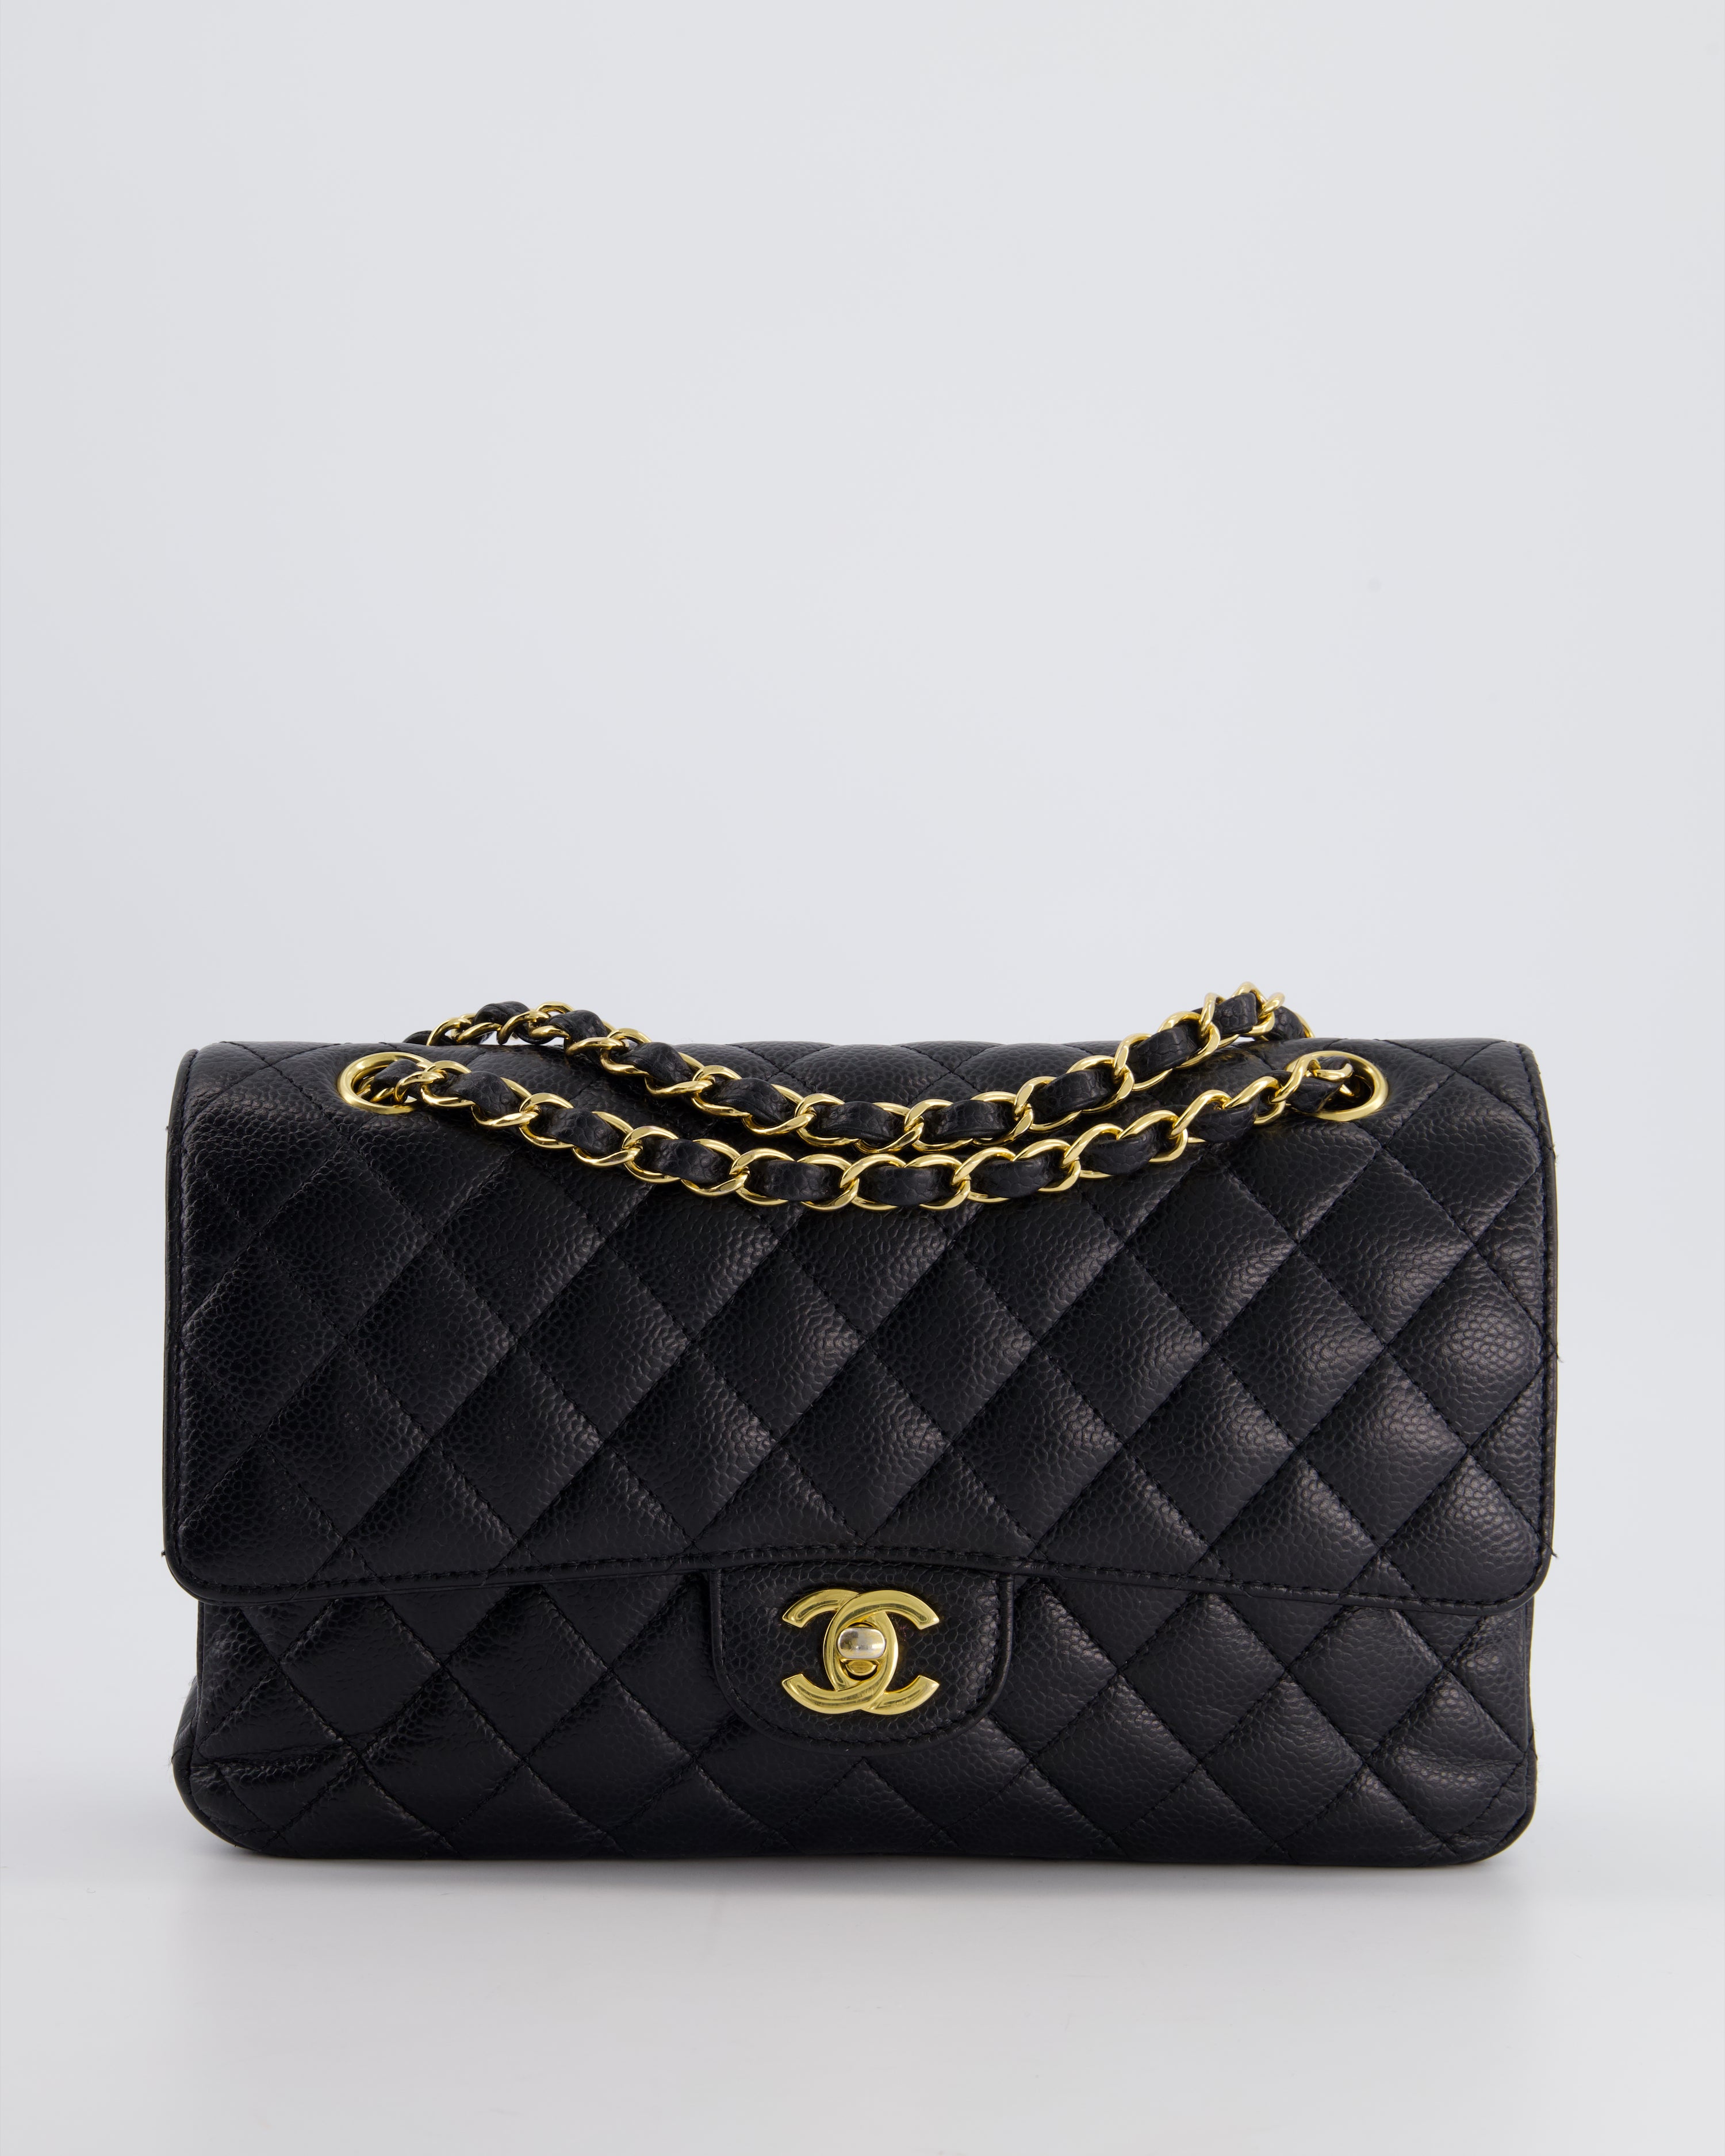 CHANEL Classic Flap Shoulder Bag Black Bags & Handbags for Women for sale